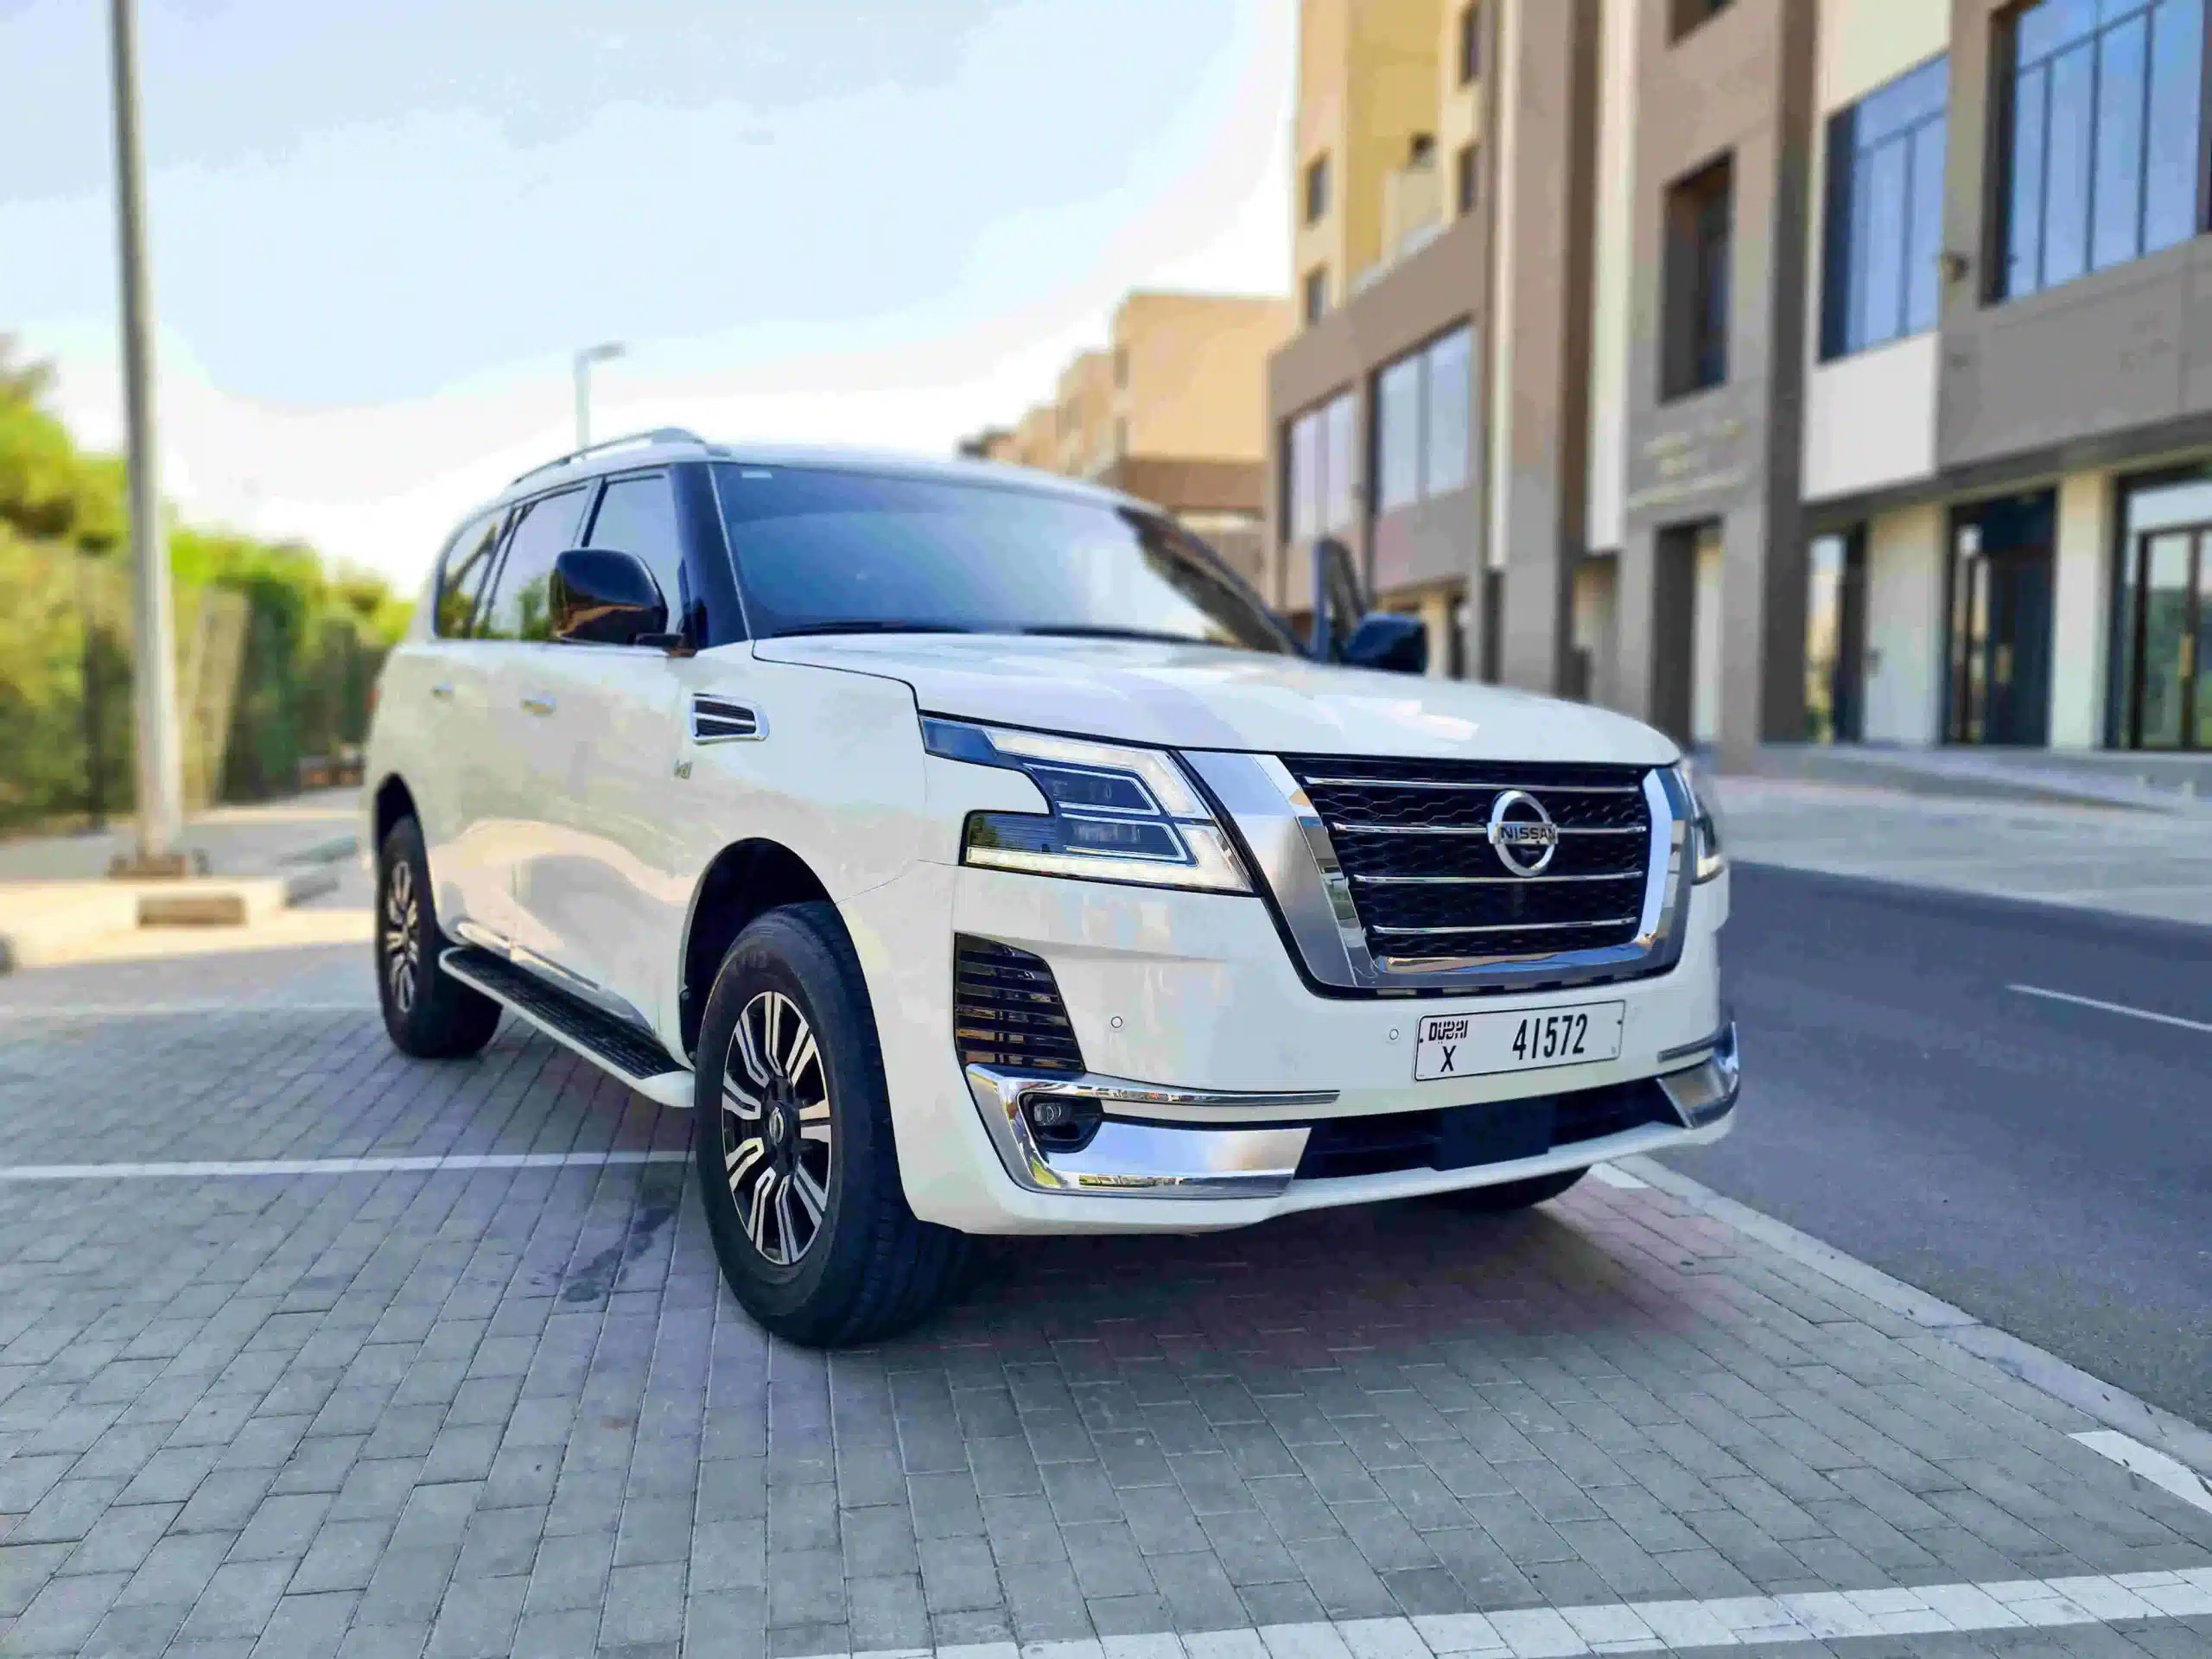 Nissan Patrol white color for rent in Dubai